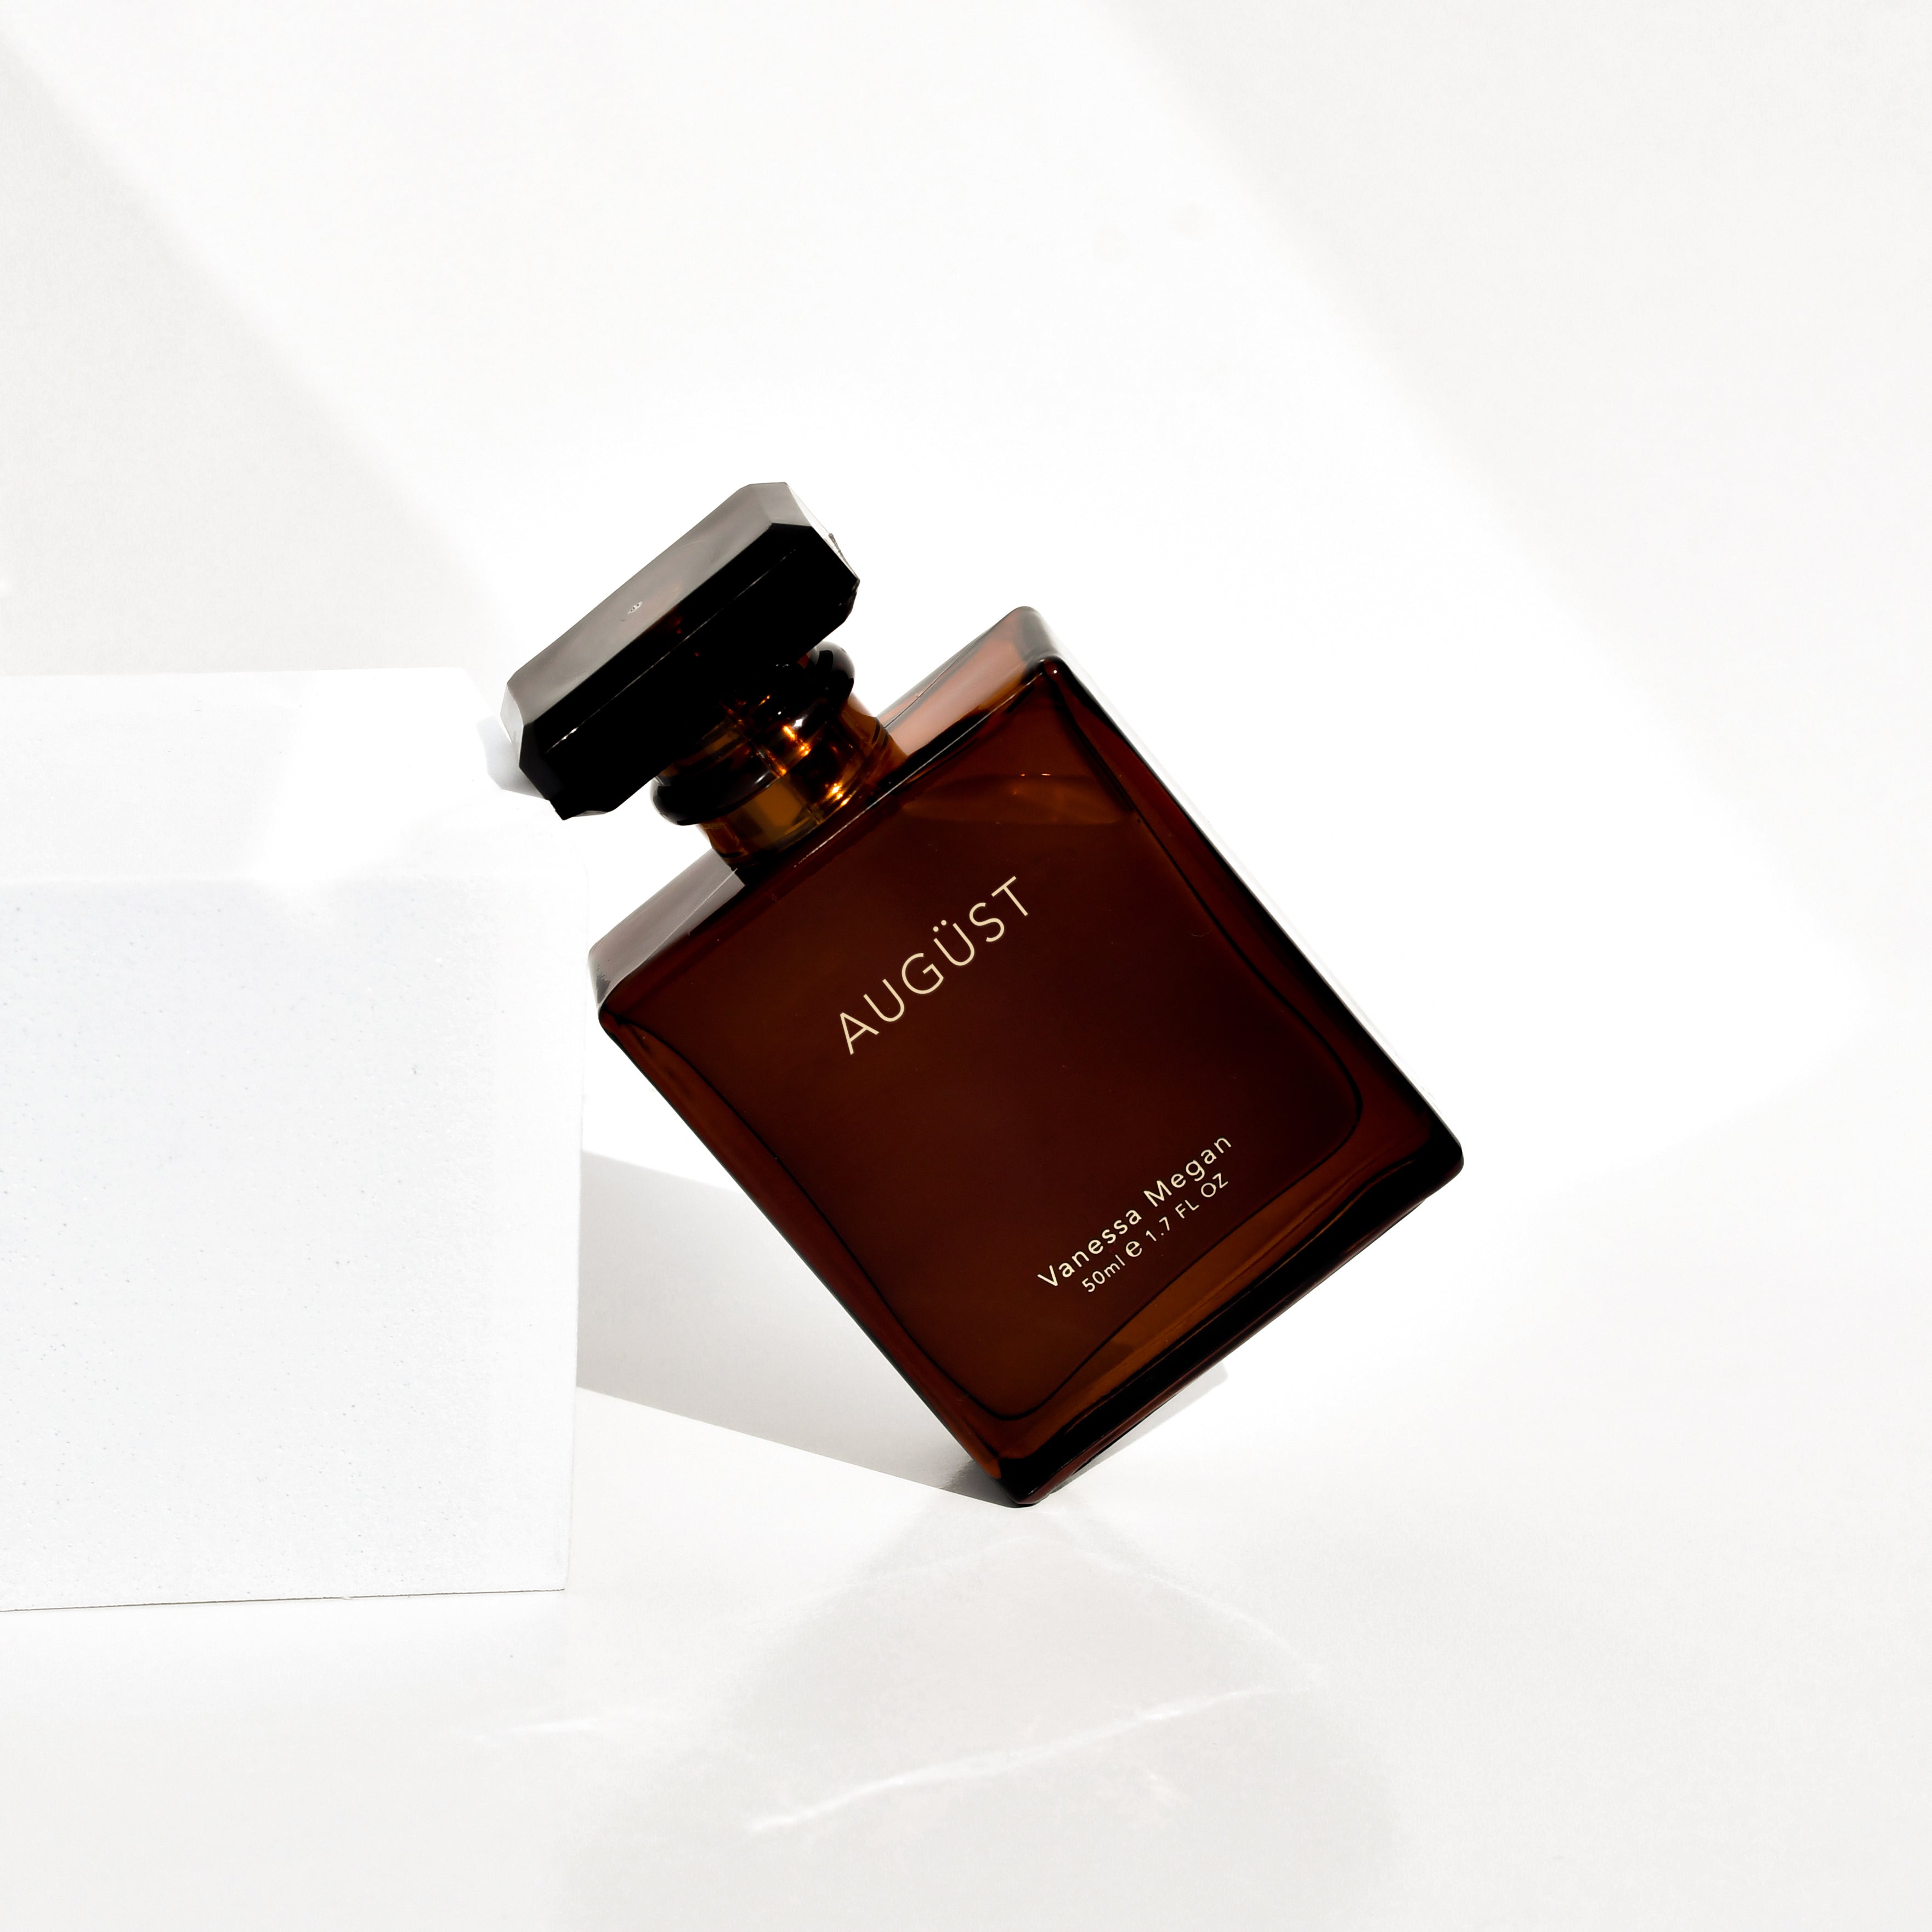 August | 100% Natural Mood Enhancing Perfume